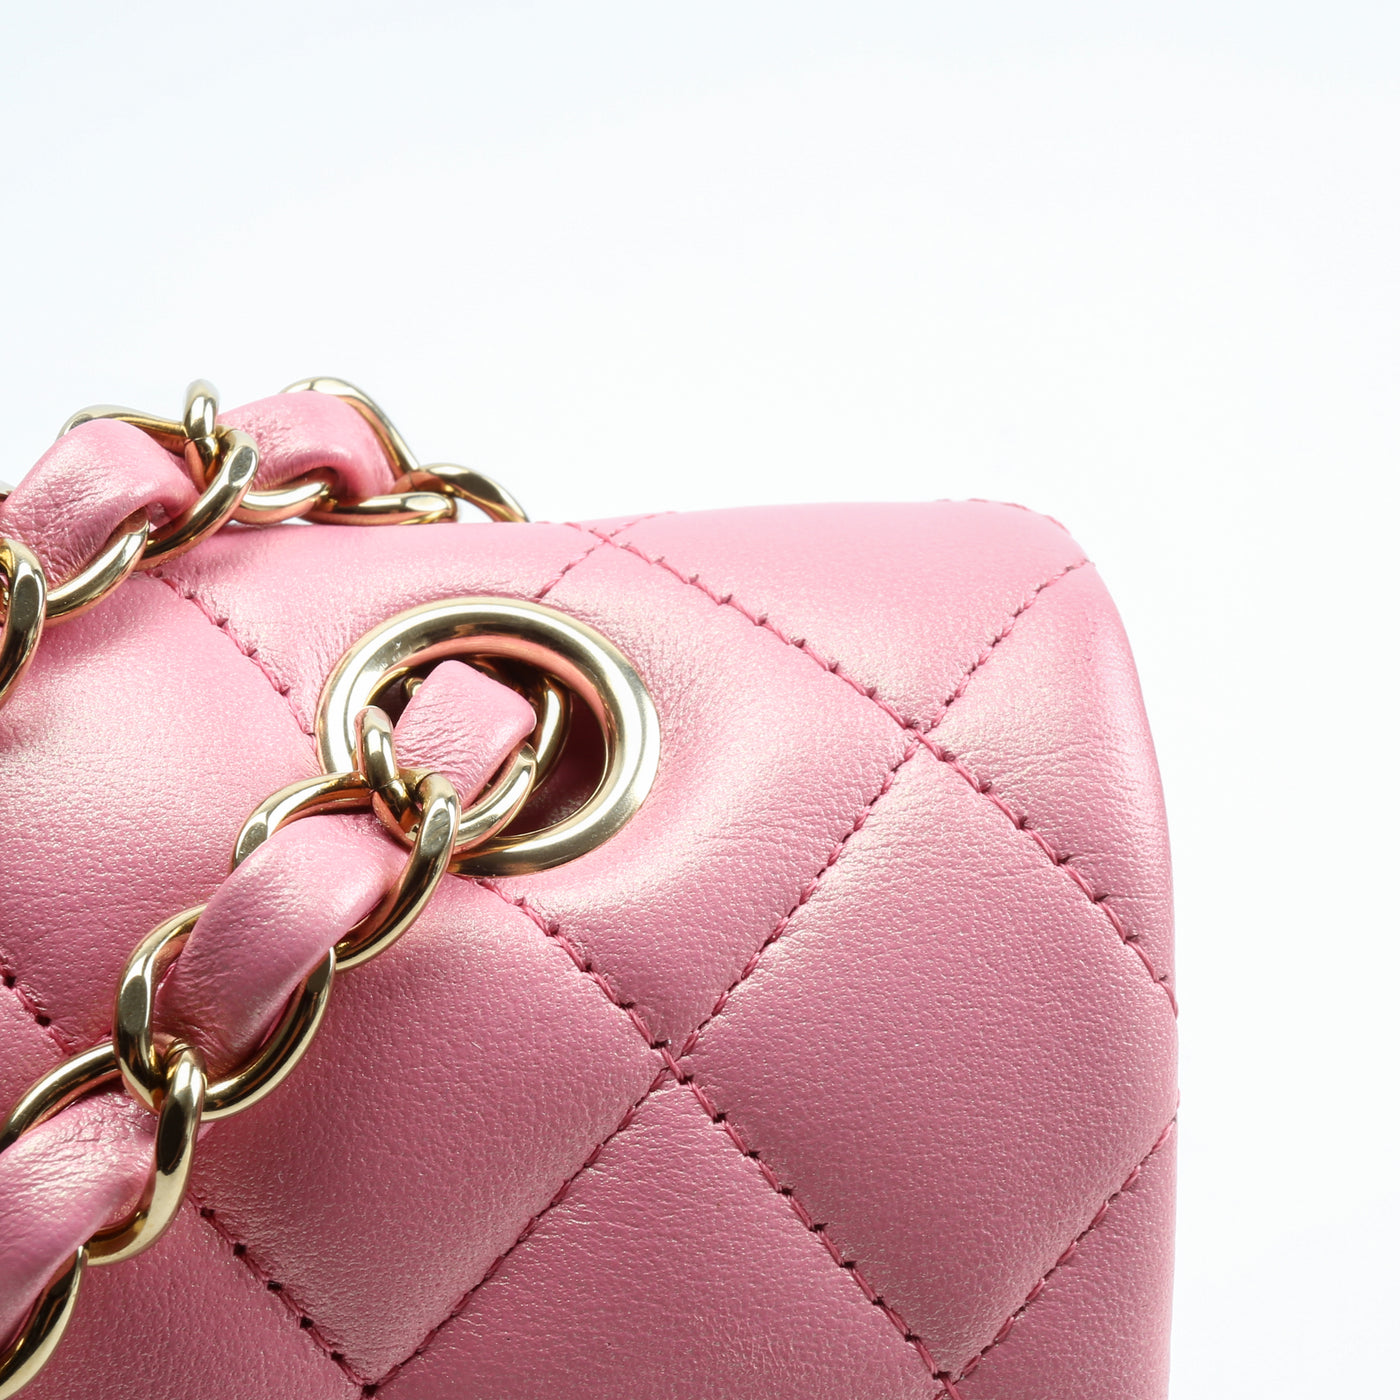 CHANEL Medium Double Flap Bag - Iridescent Pink